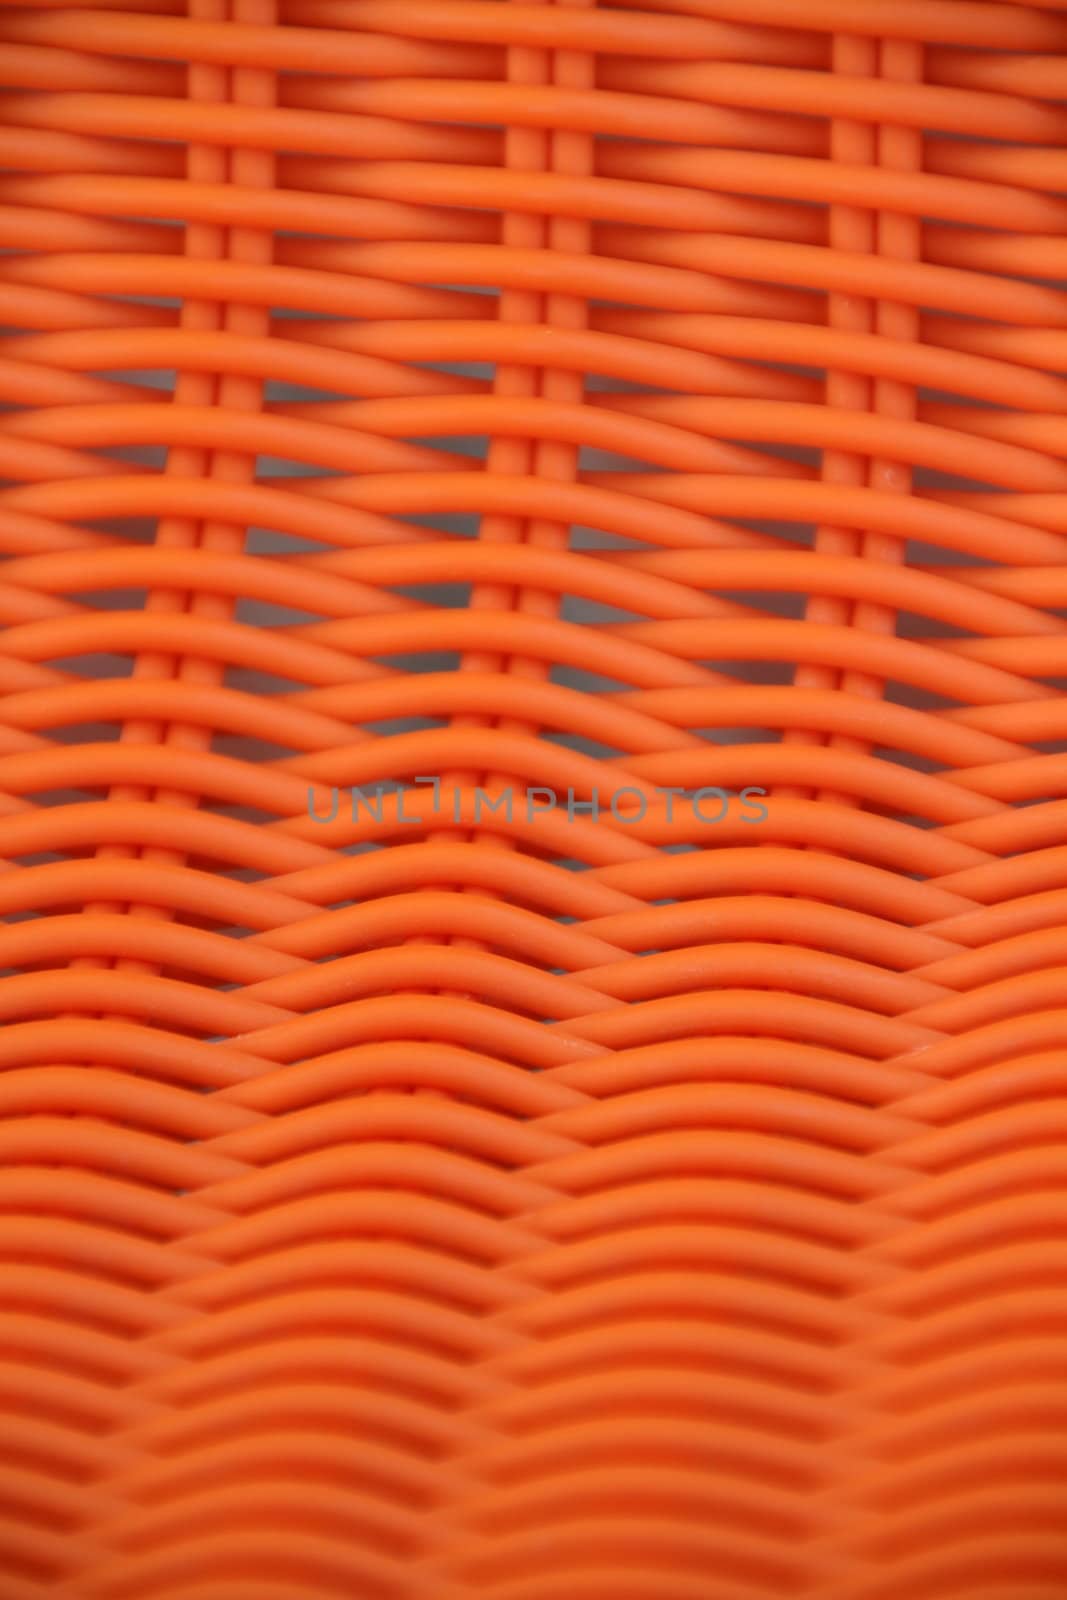 The Weaved orange plastic texture